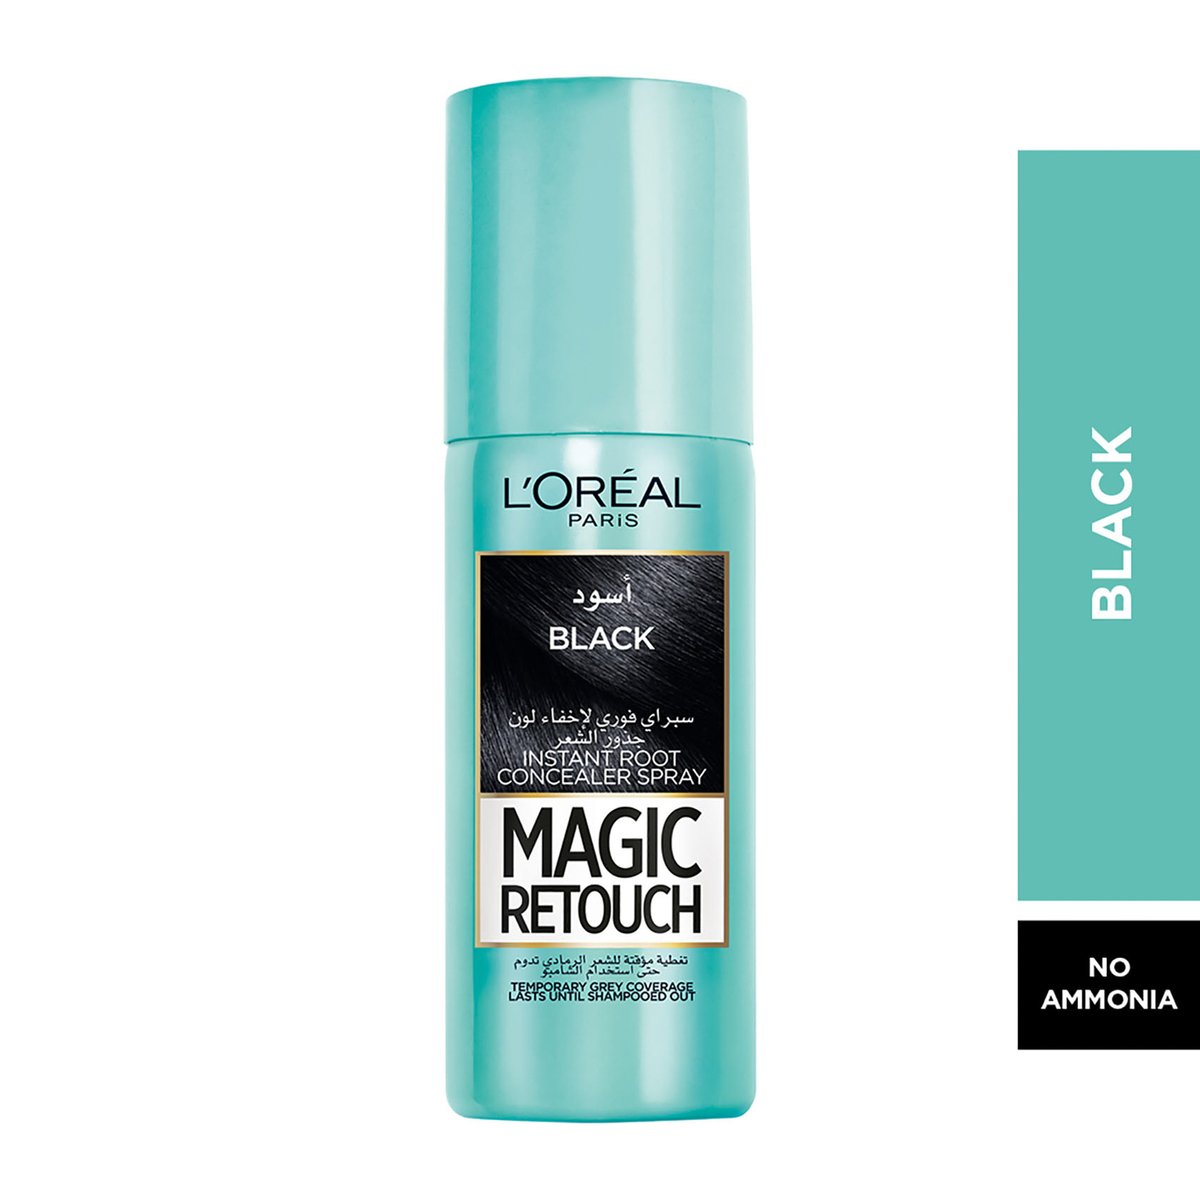 L'Oreal Paris Magic Retouch Concealer Spray Black 75 ml